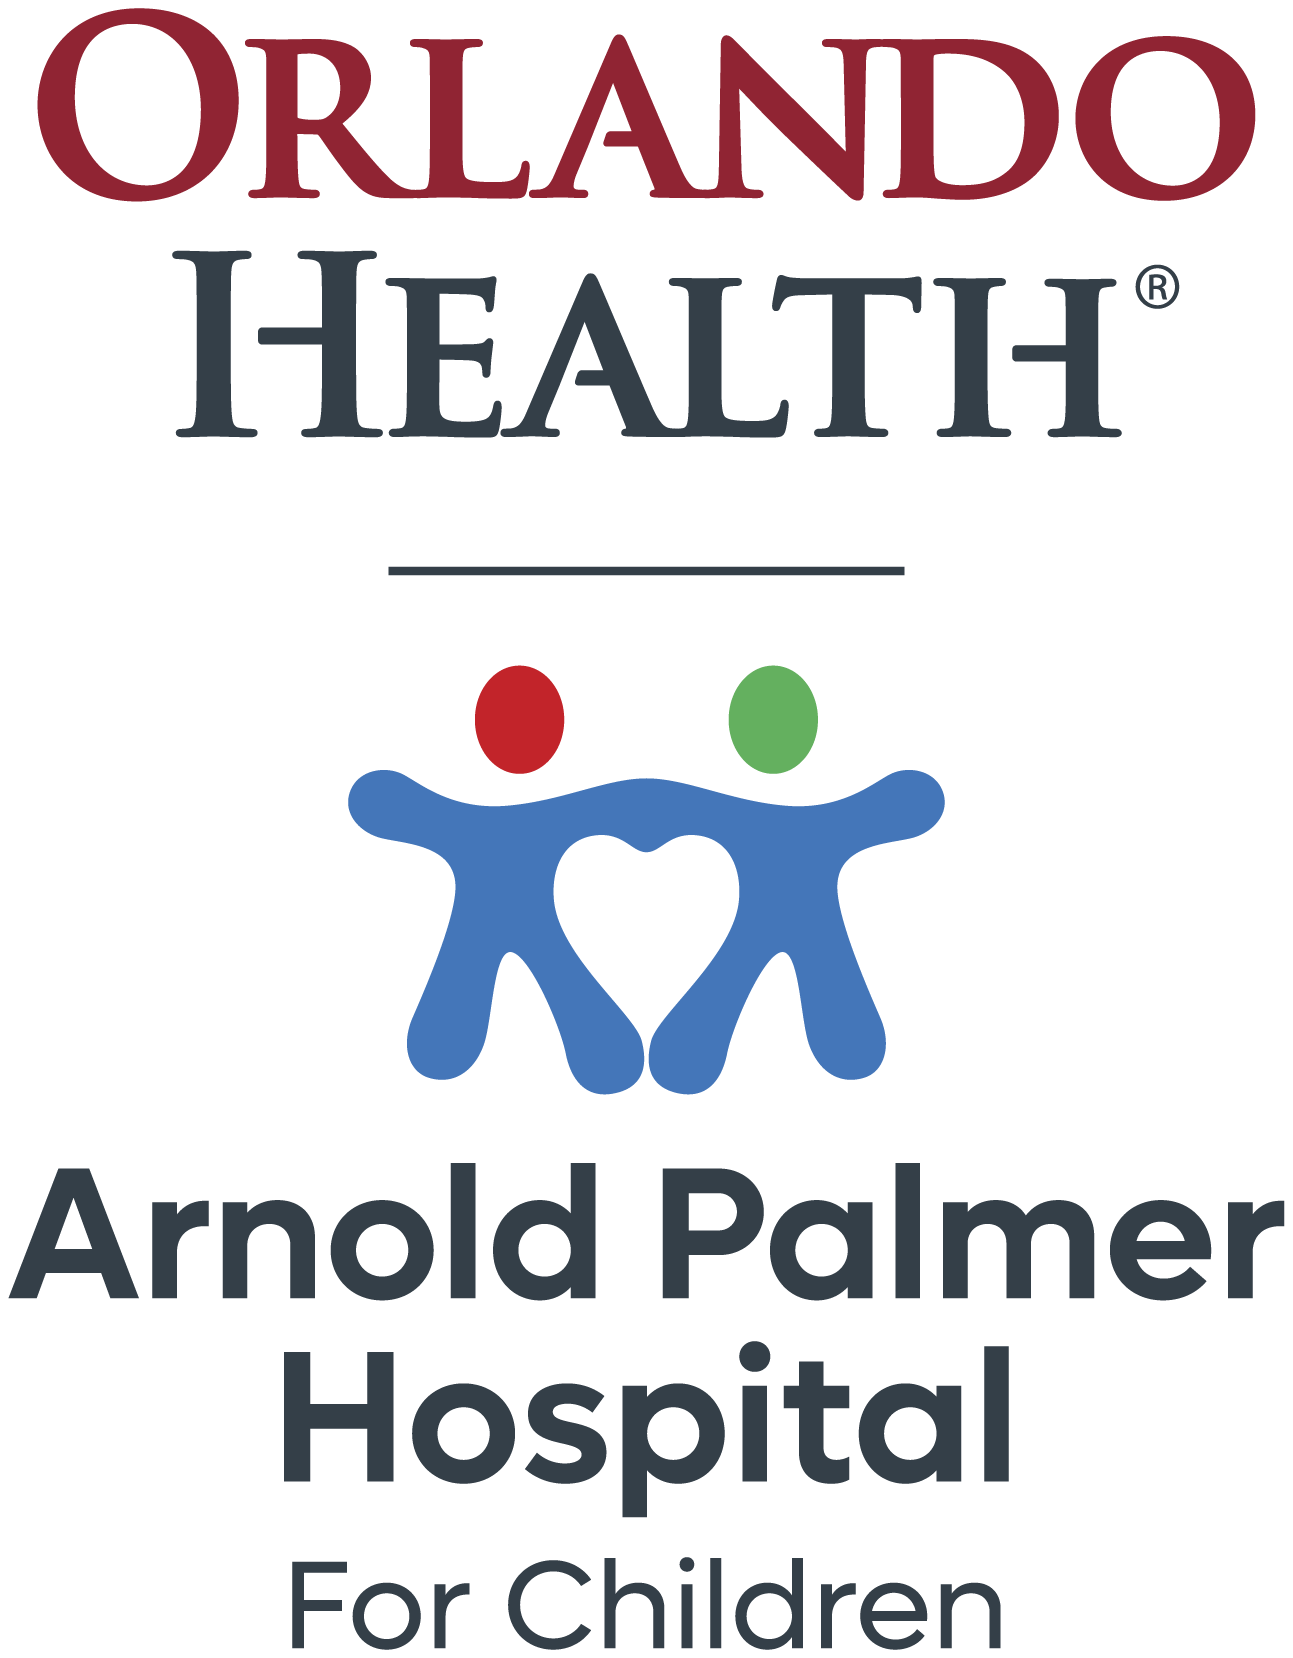 Orlando Health Arnold Palmer Hospital for Children